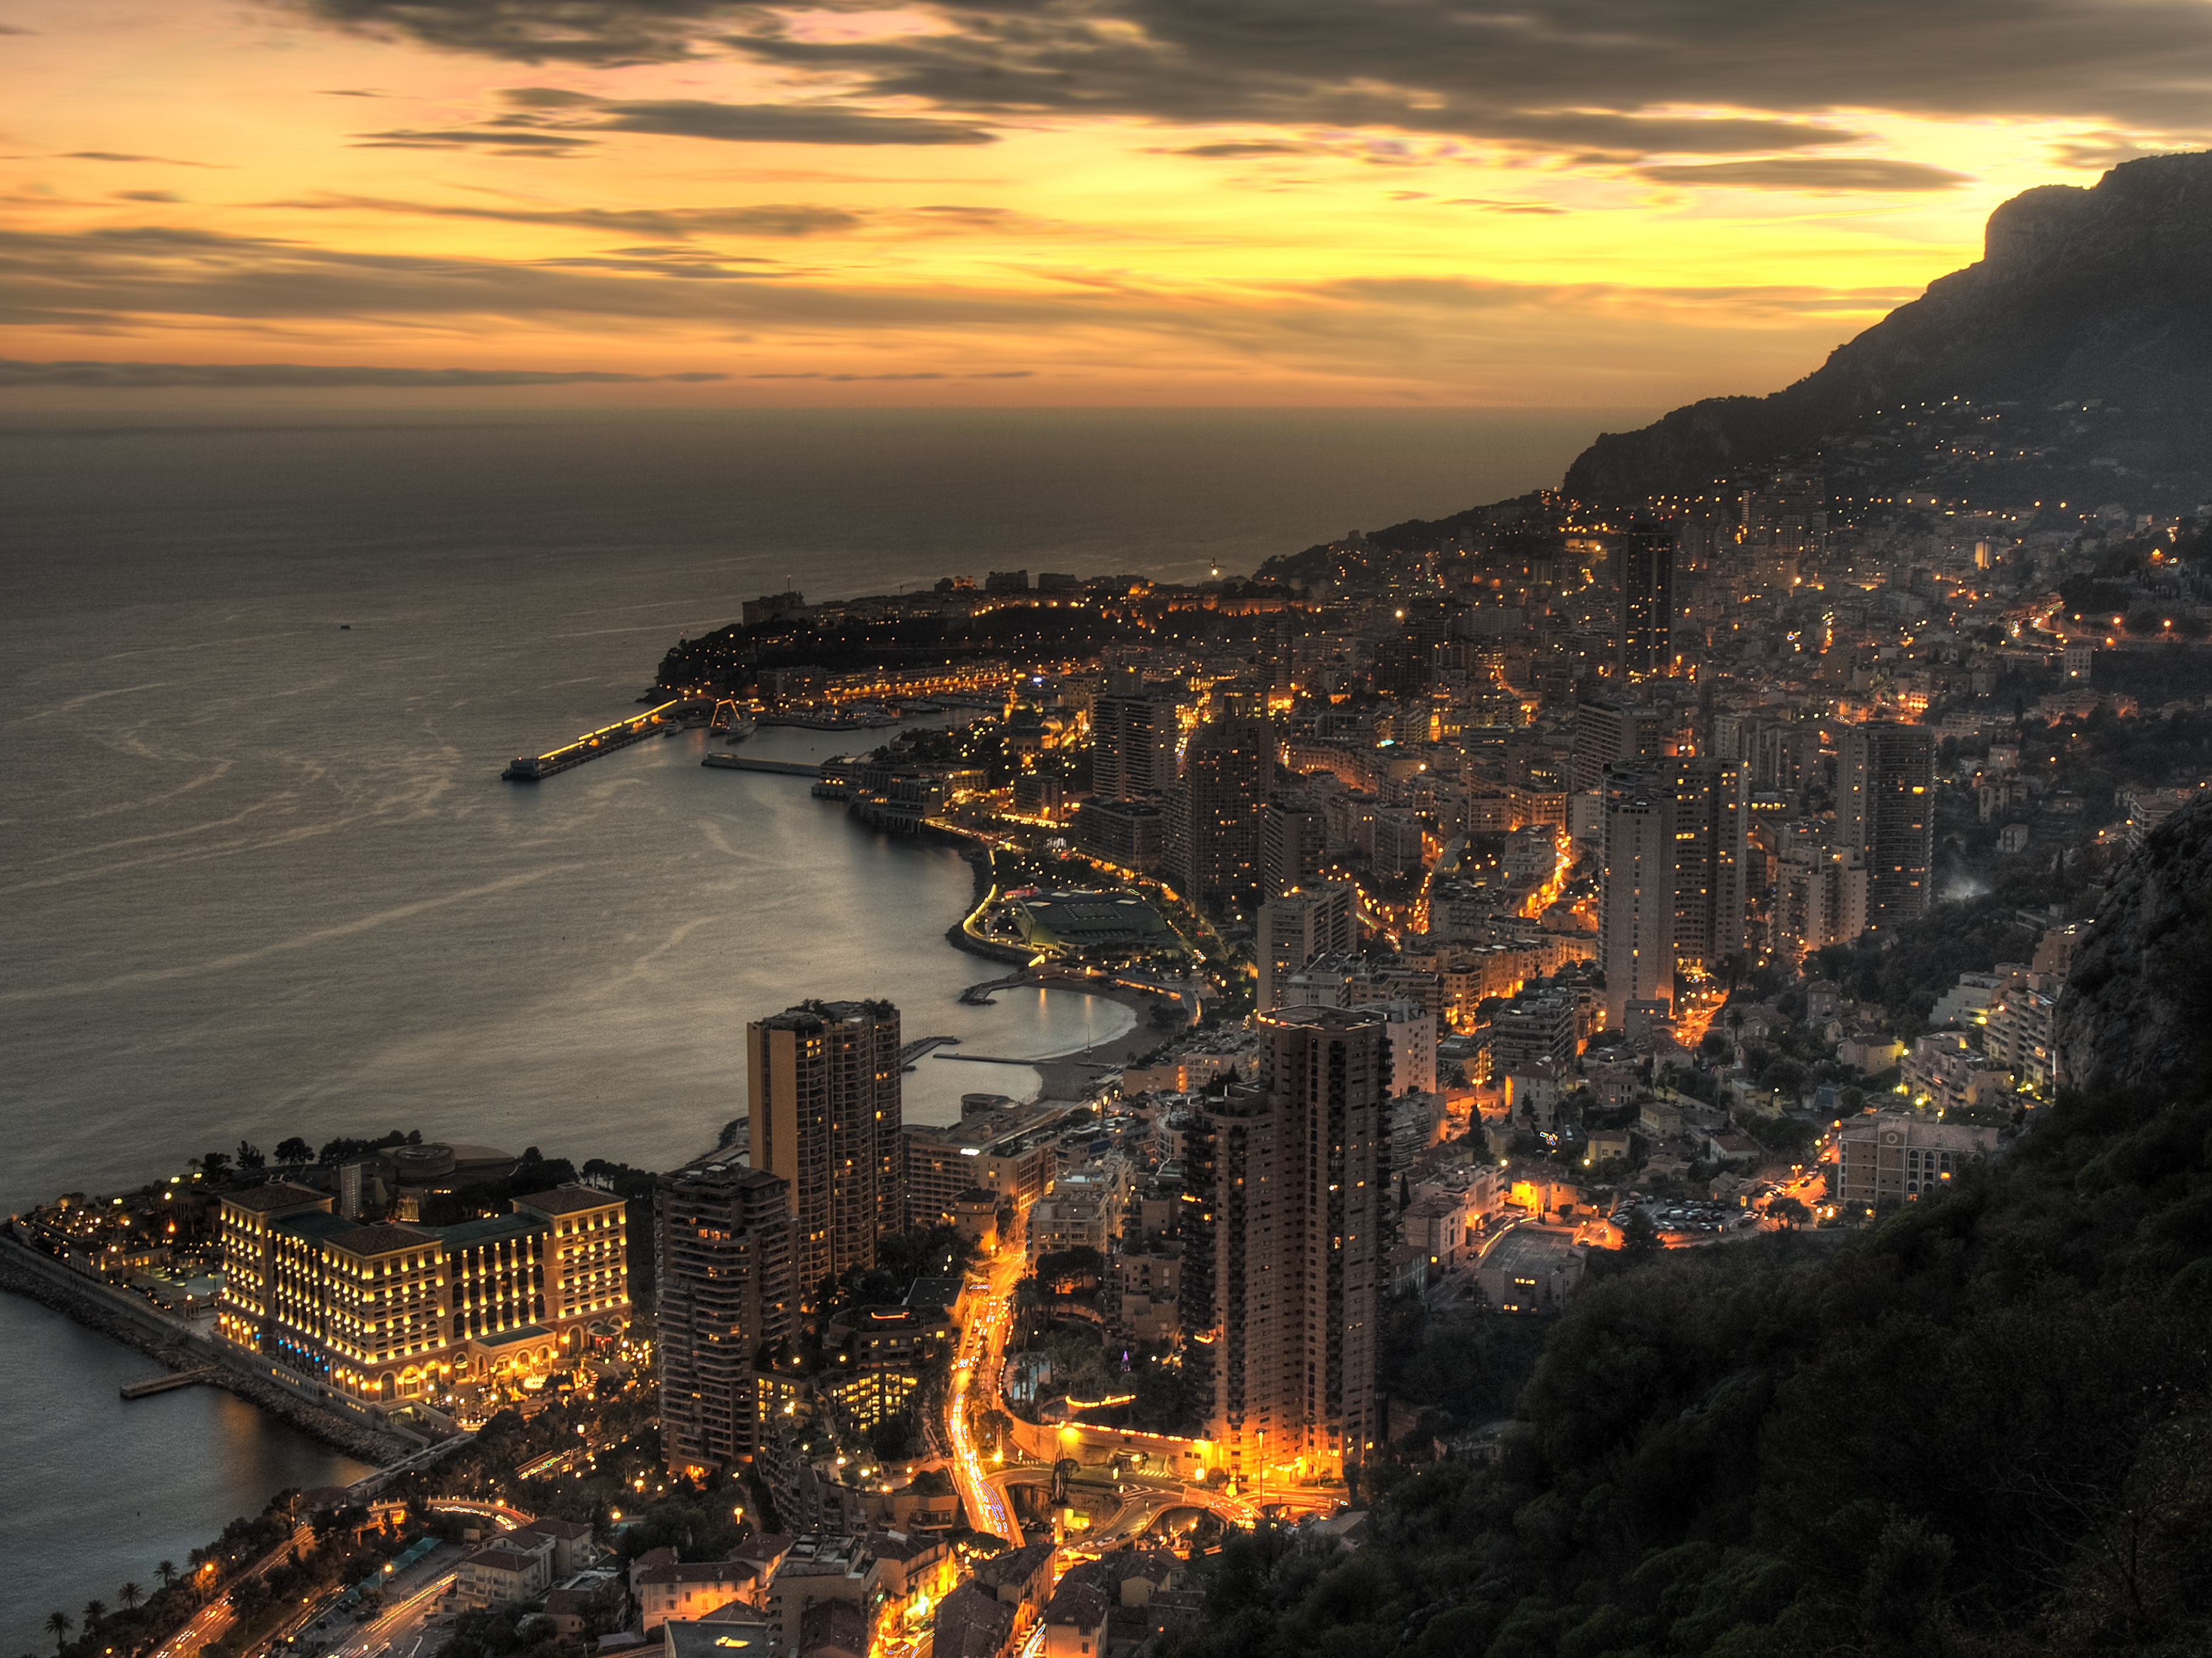 Aerial view of Monaco at dusk